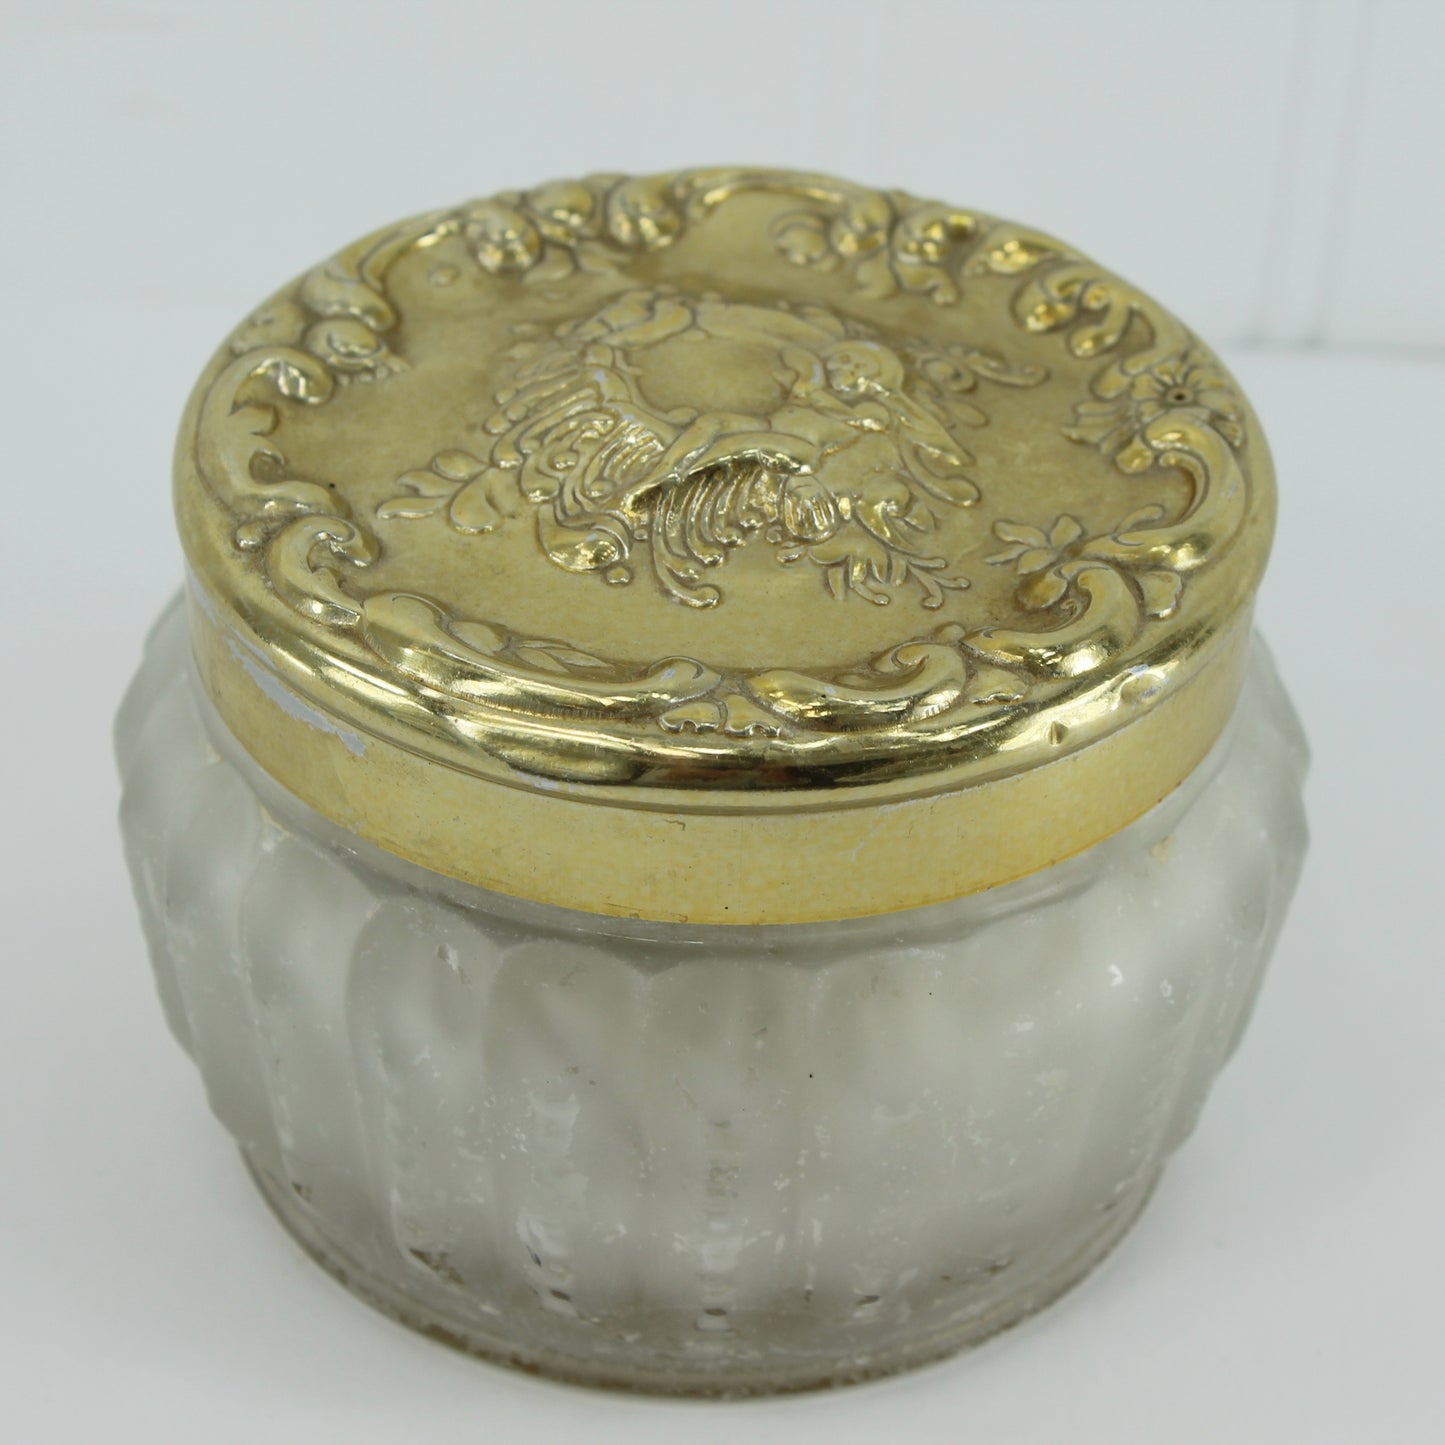 Vintage Estee Lauder Renutrive Face Powder in Glass Cherub Angel Jar Sheer Bisque 1960s